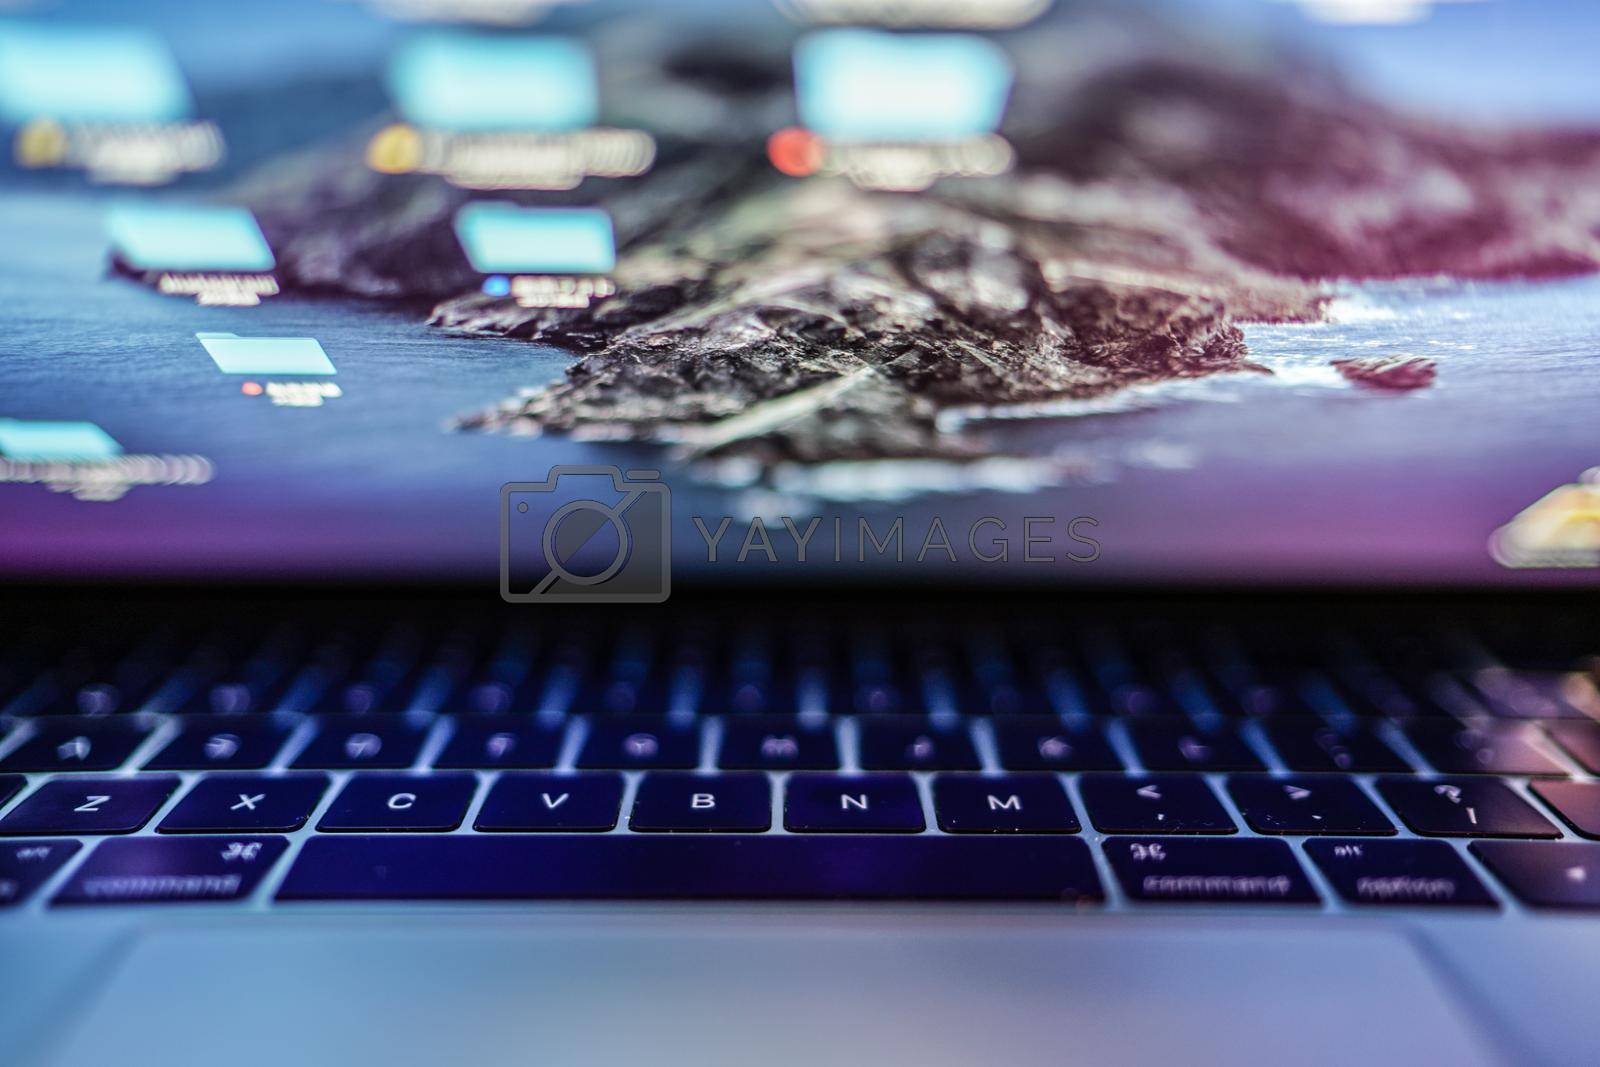 Royalty free image of Blue Glowing Laptop Keyboard Image by kanzilyou